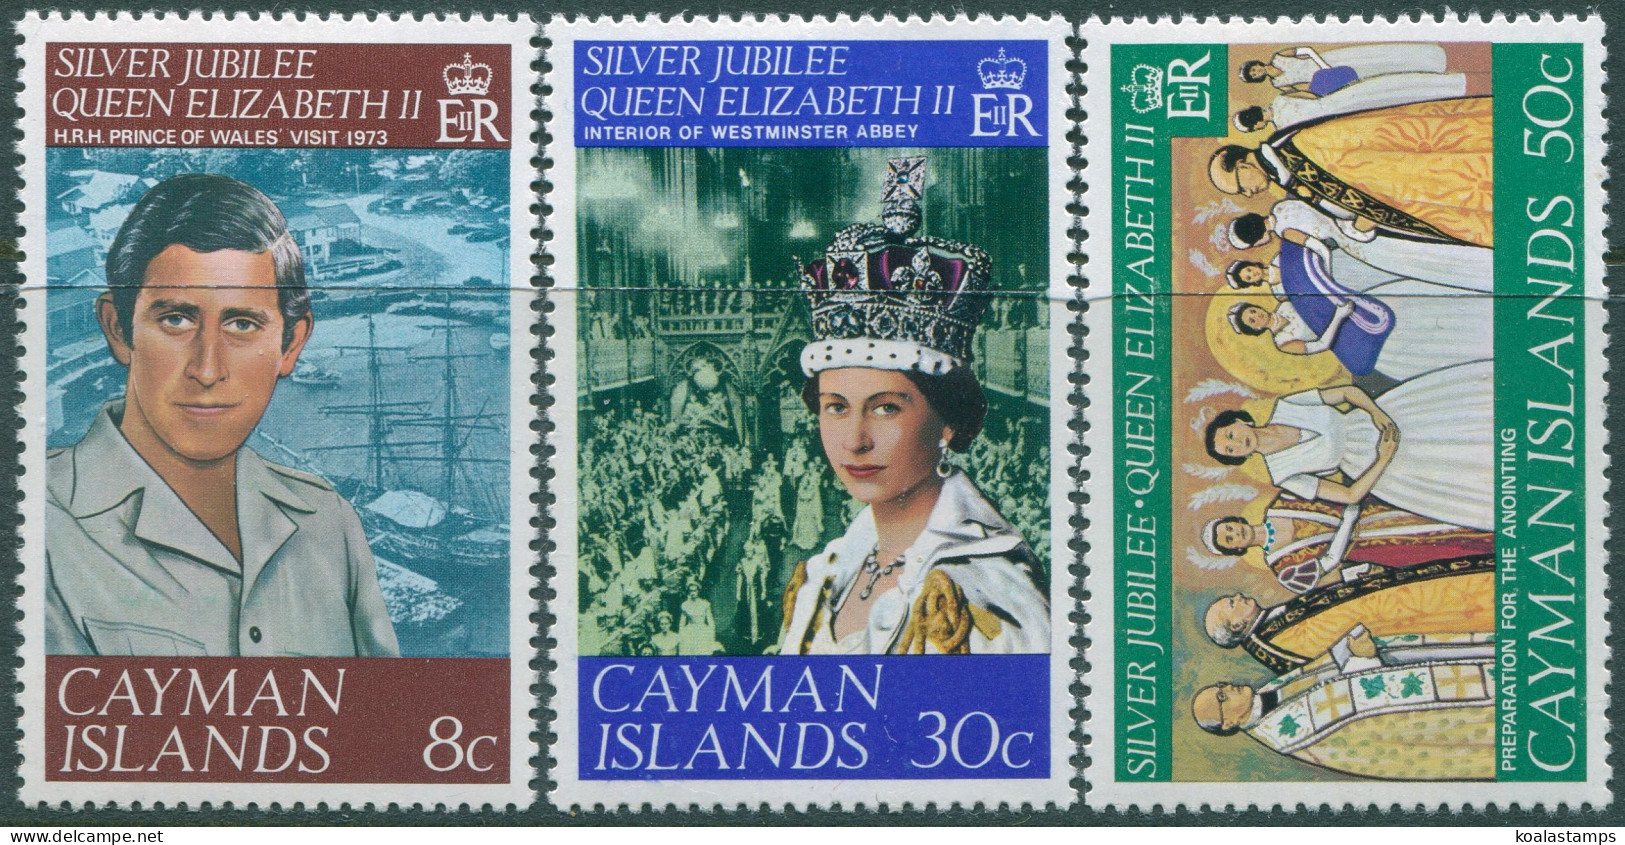 Cayman Islands 1977 SG427-429 Silver Jubilee Set MLH - Cayman Islands